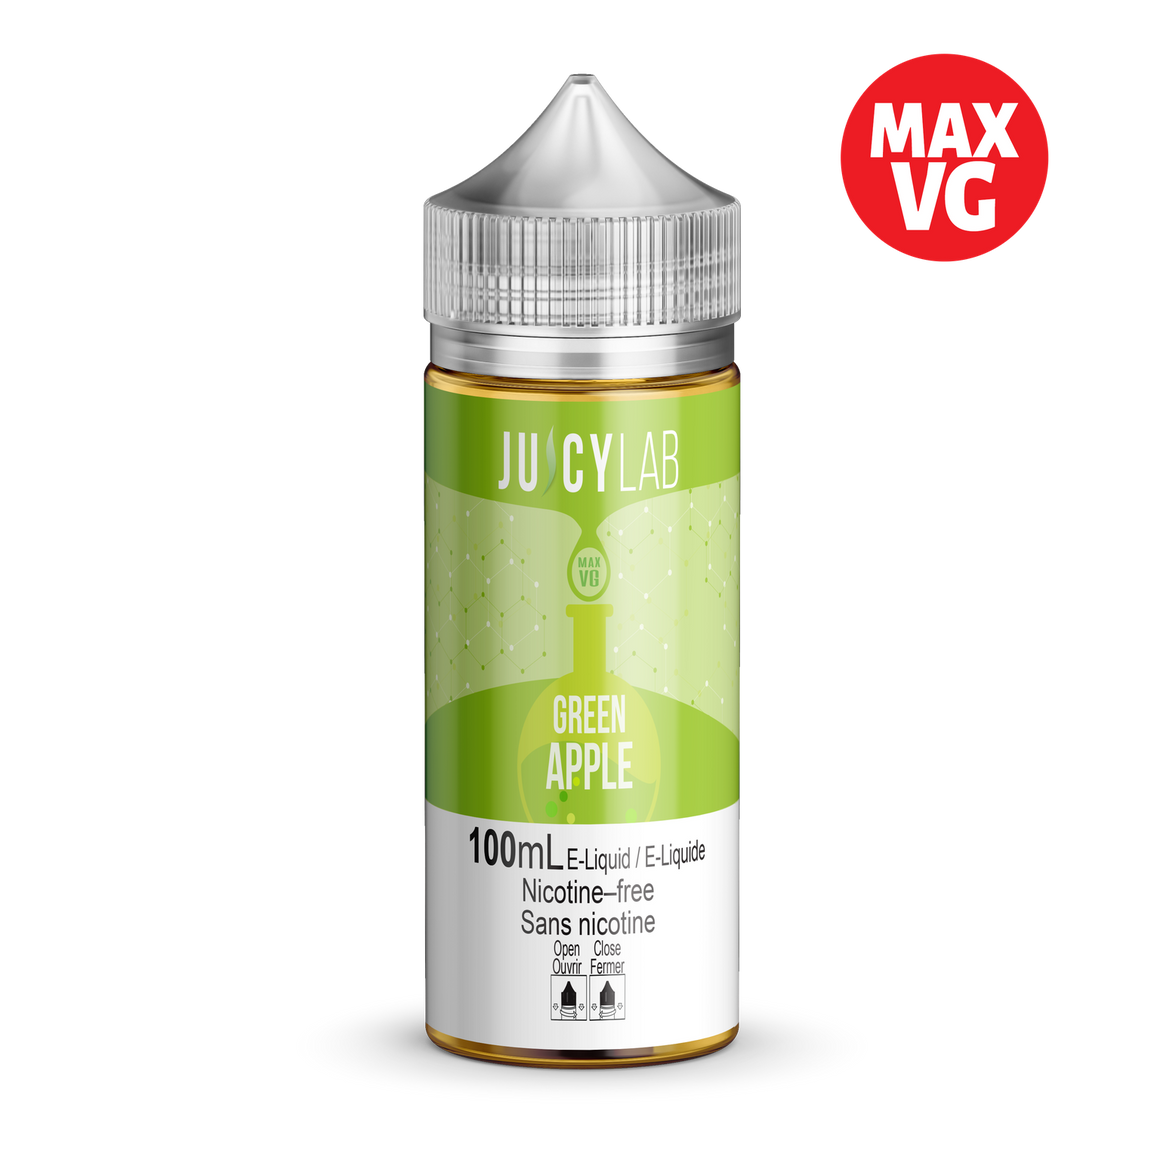 MAX VG Juicy Lab Green Apple 100ml